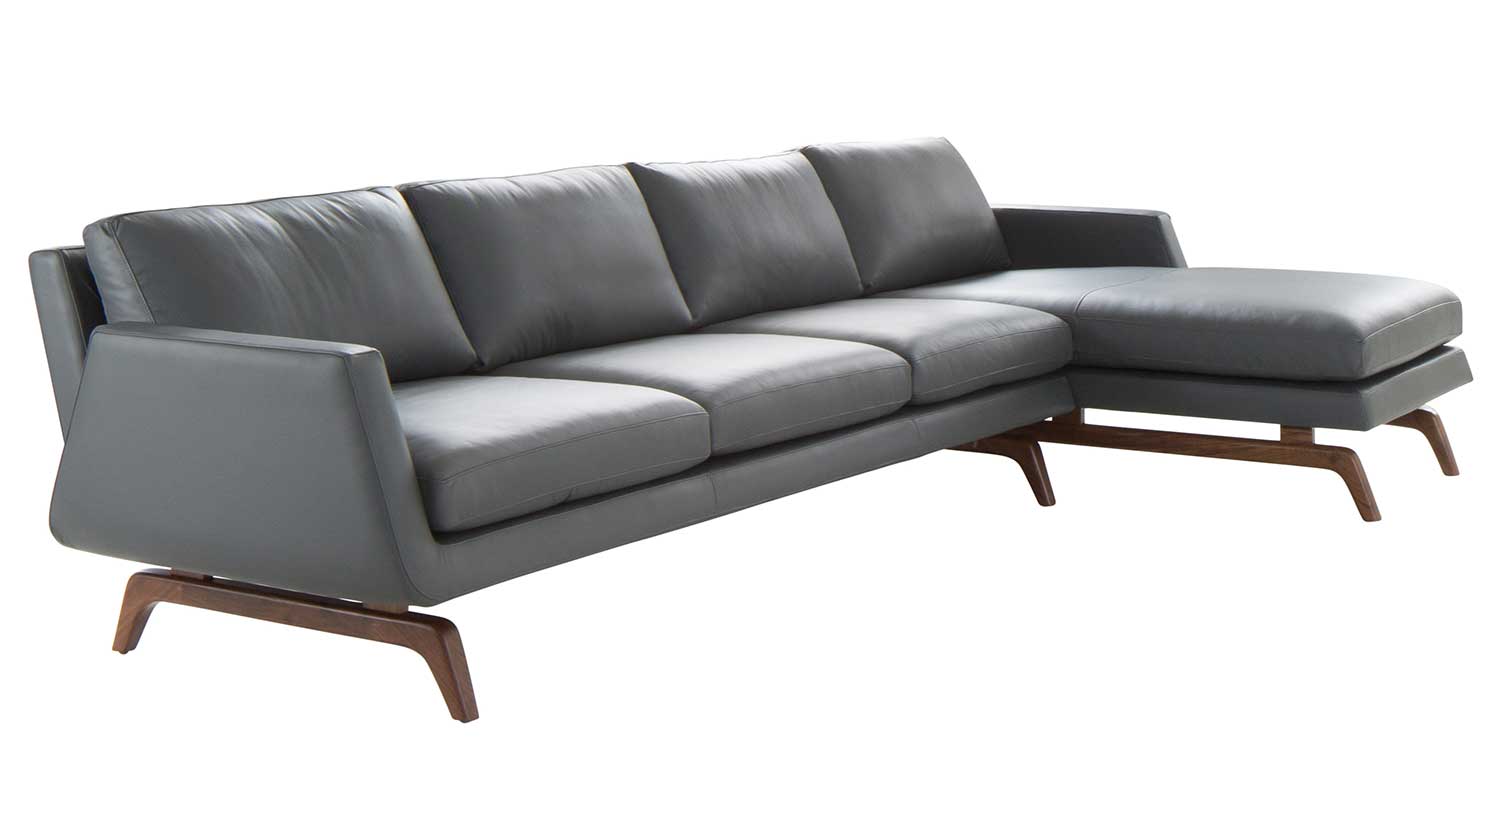 american leather nash sofa price